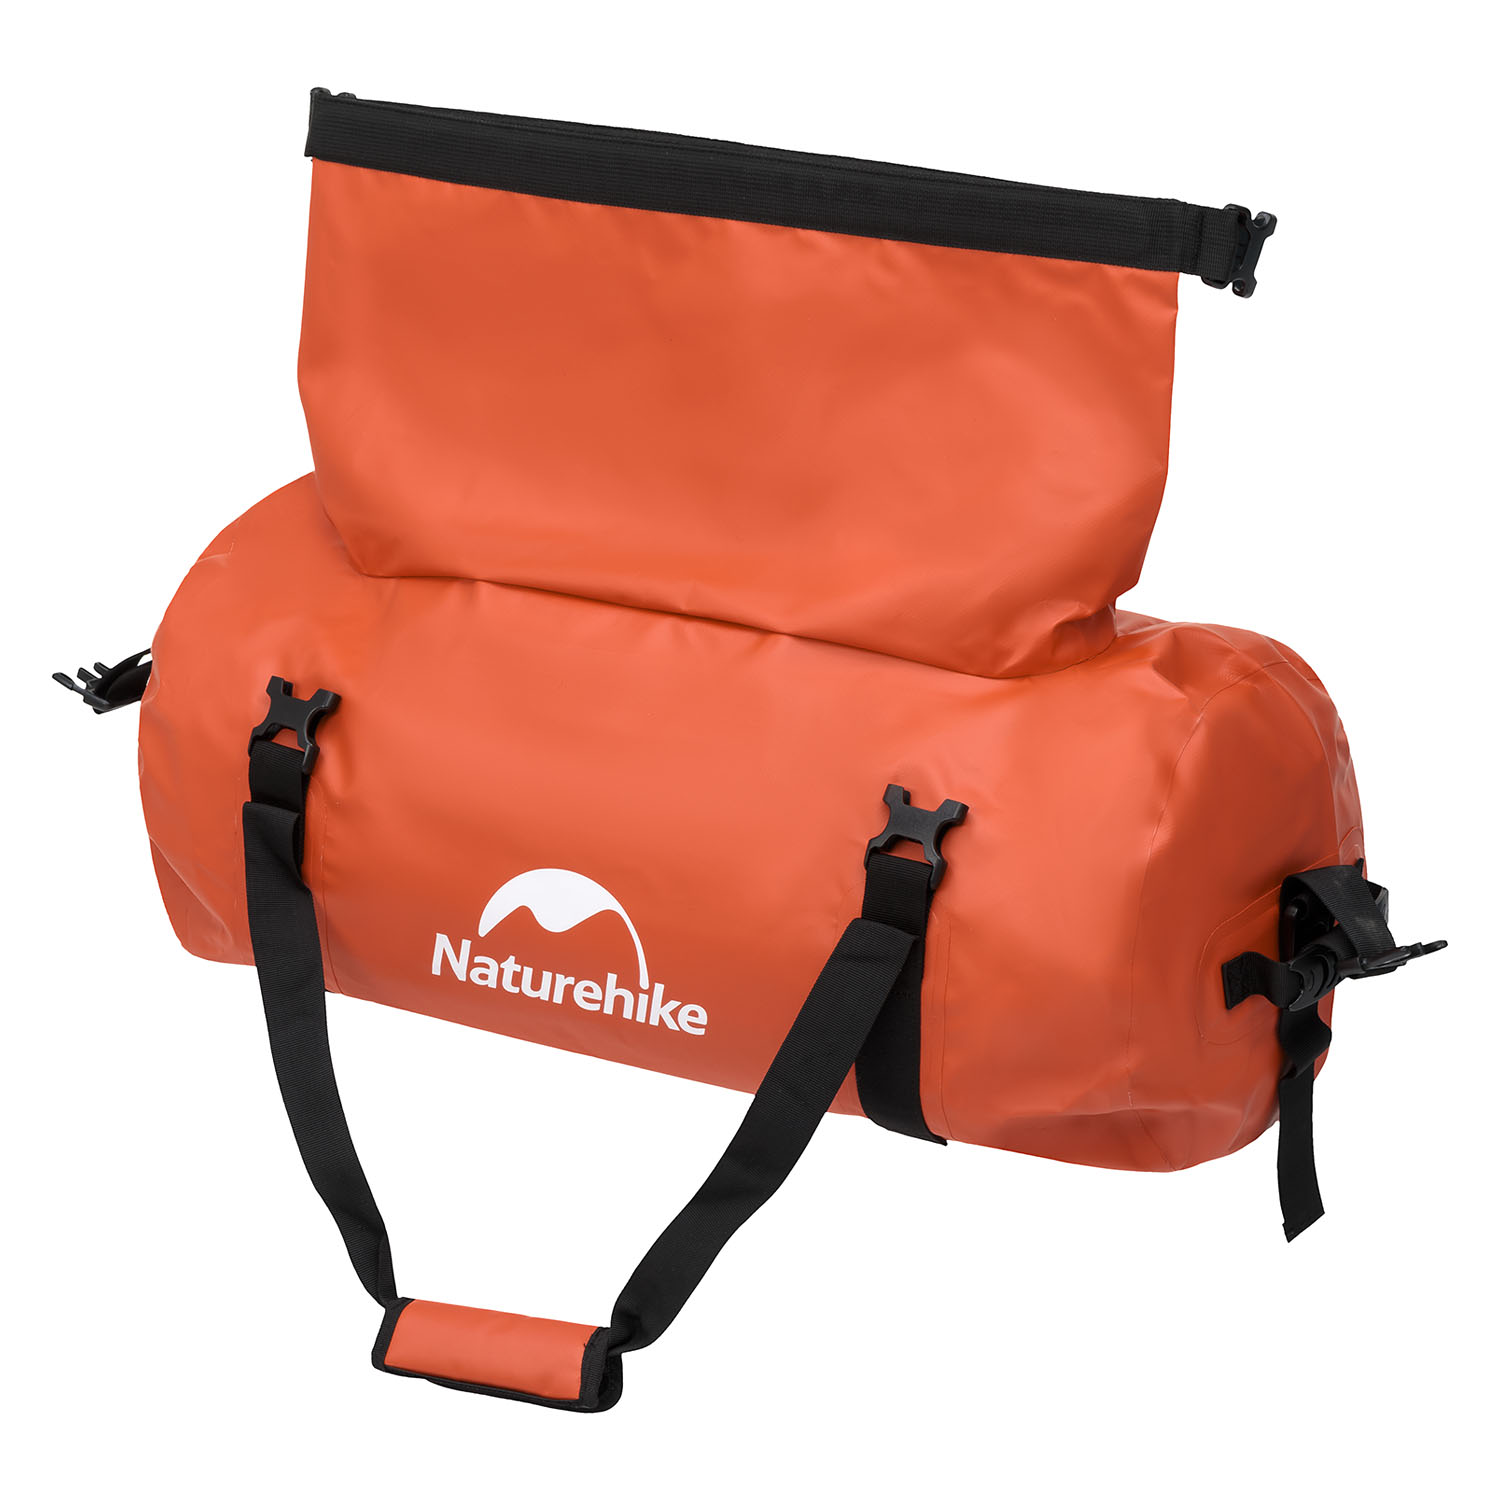 Баул Naturehike Wet And Dry Waterproof Duffel Bag 60L Red